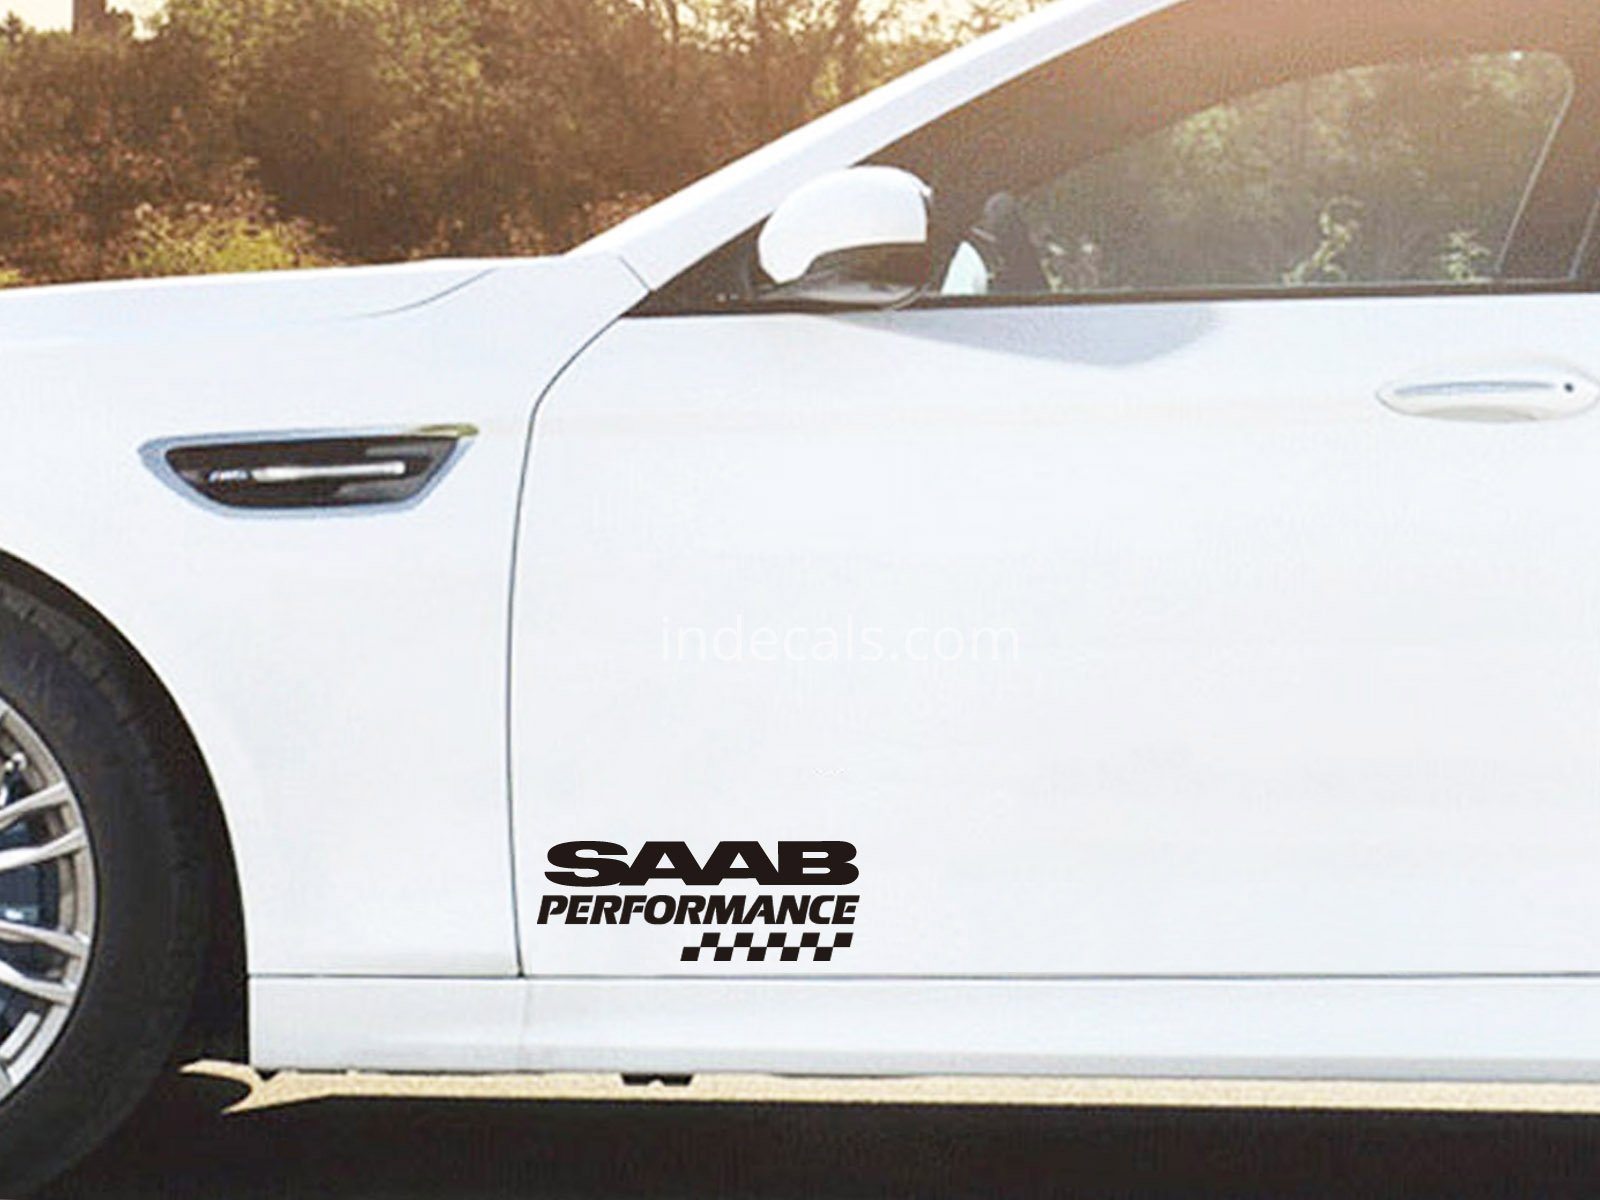 2 x Saab Performance Stickers for Doors - Black